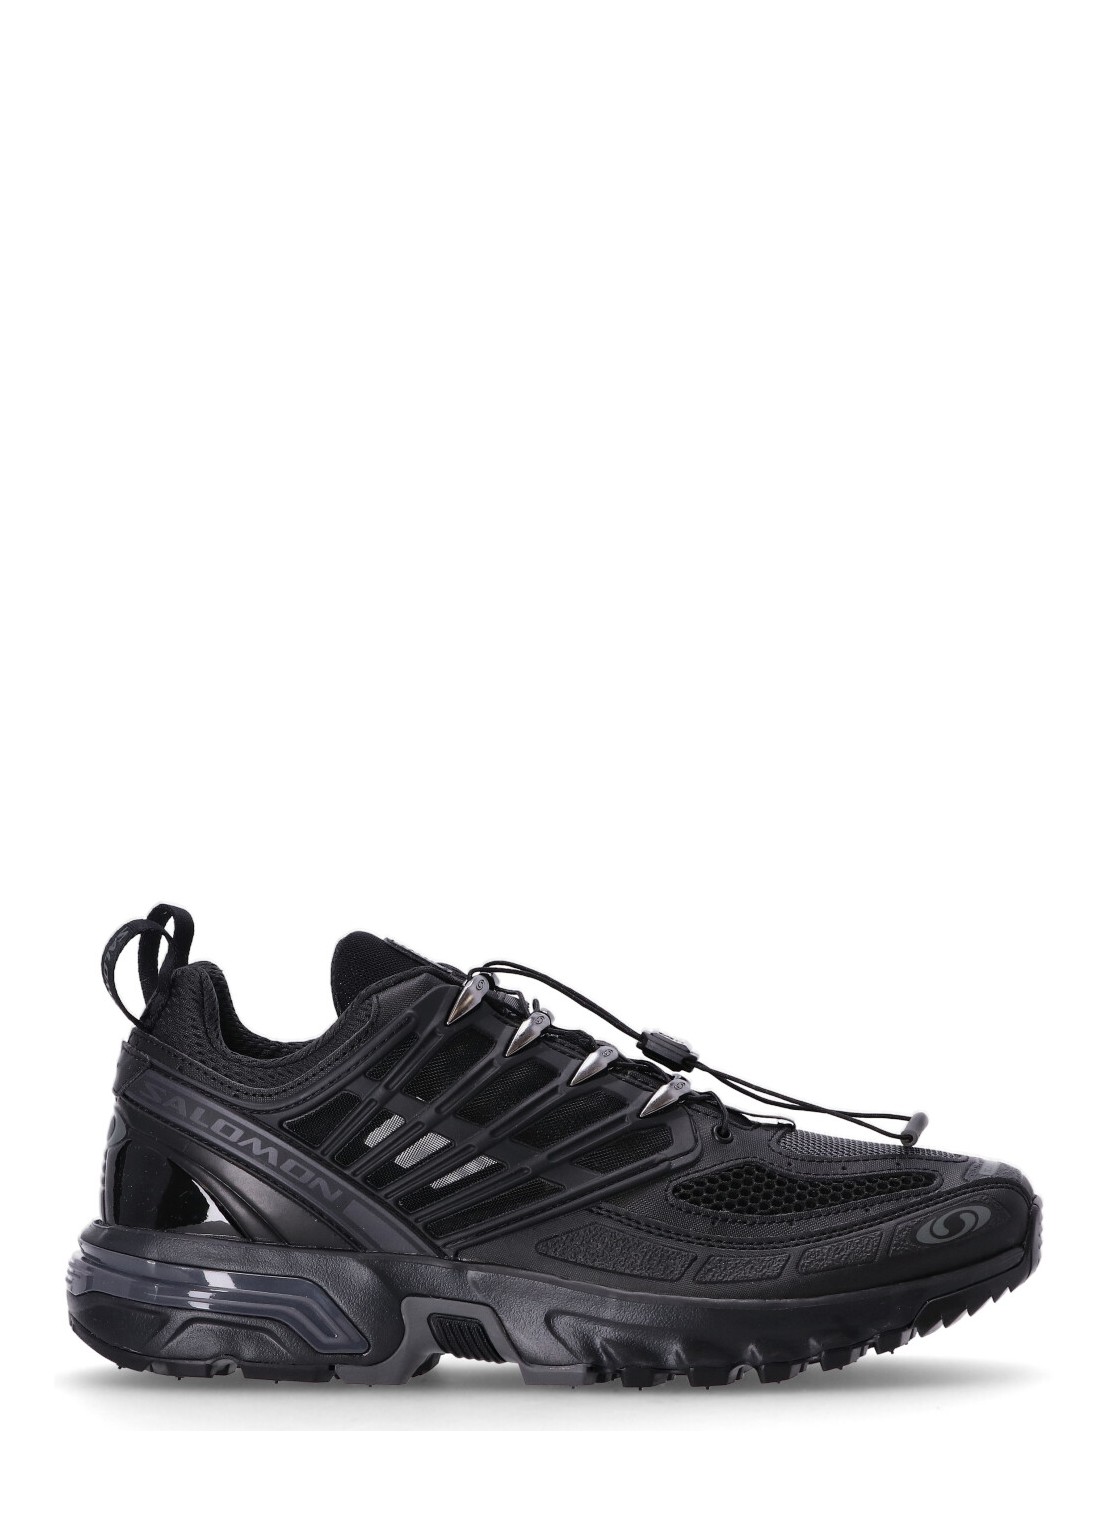 Sneaker salomon sneaker man acs pro l47179800 black black black talla negro
 